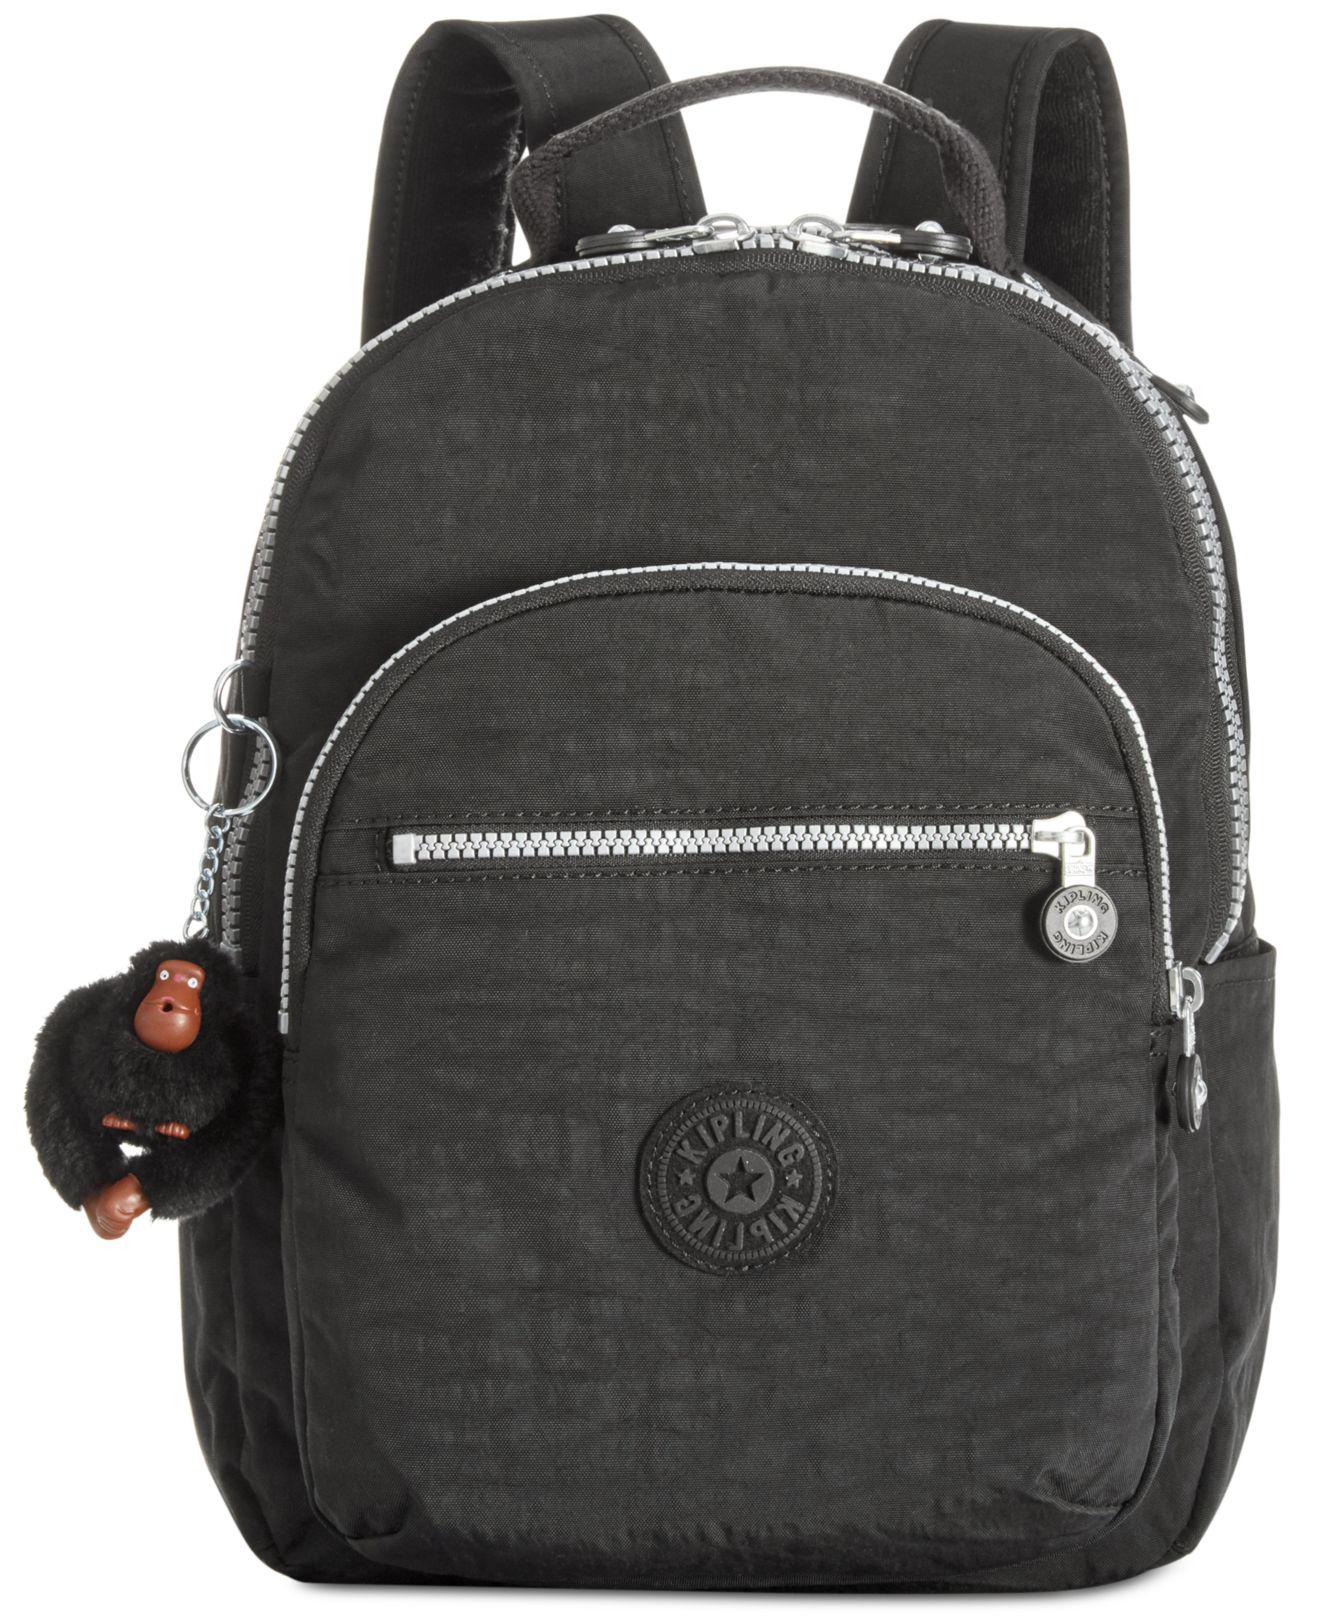 Kipling Synthetic Seoul Go Small Backpack in Black for Men - Lyst